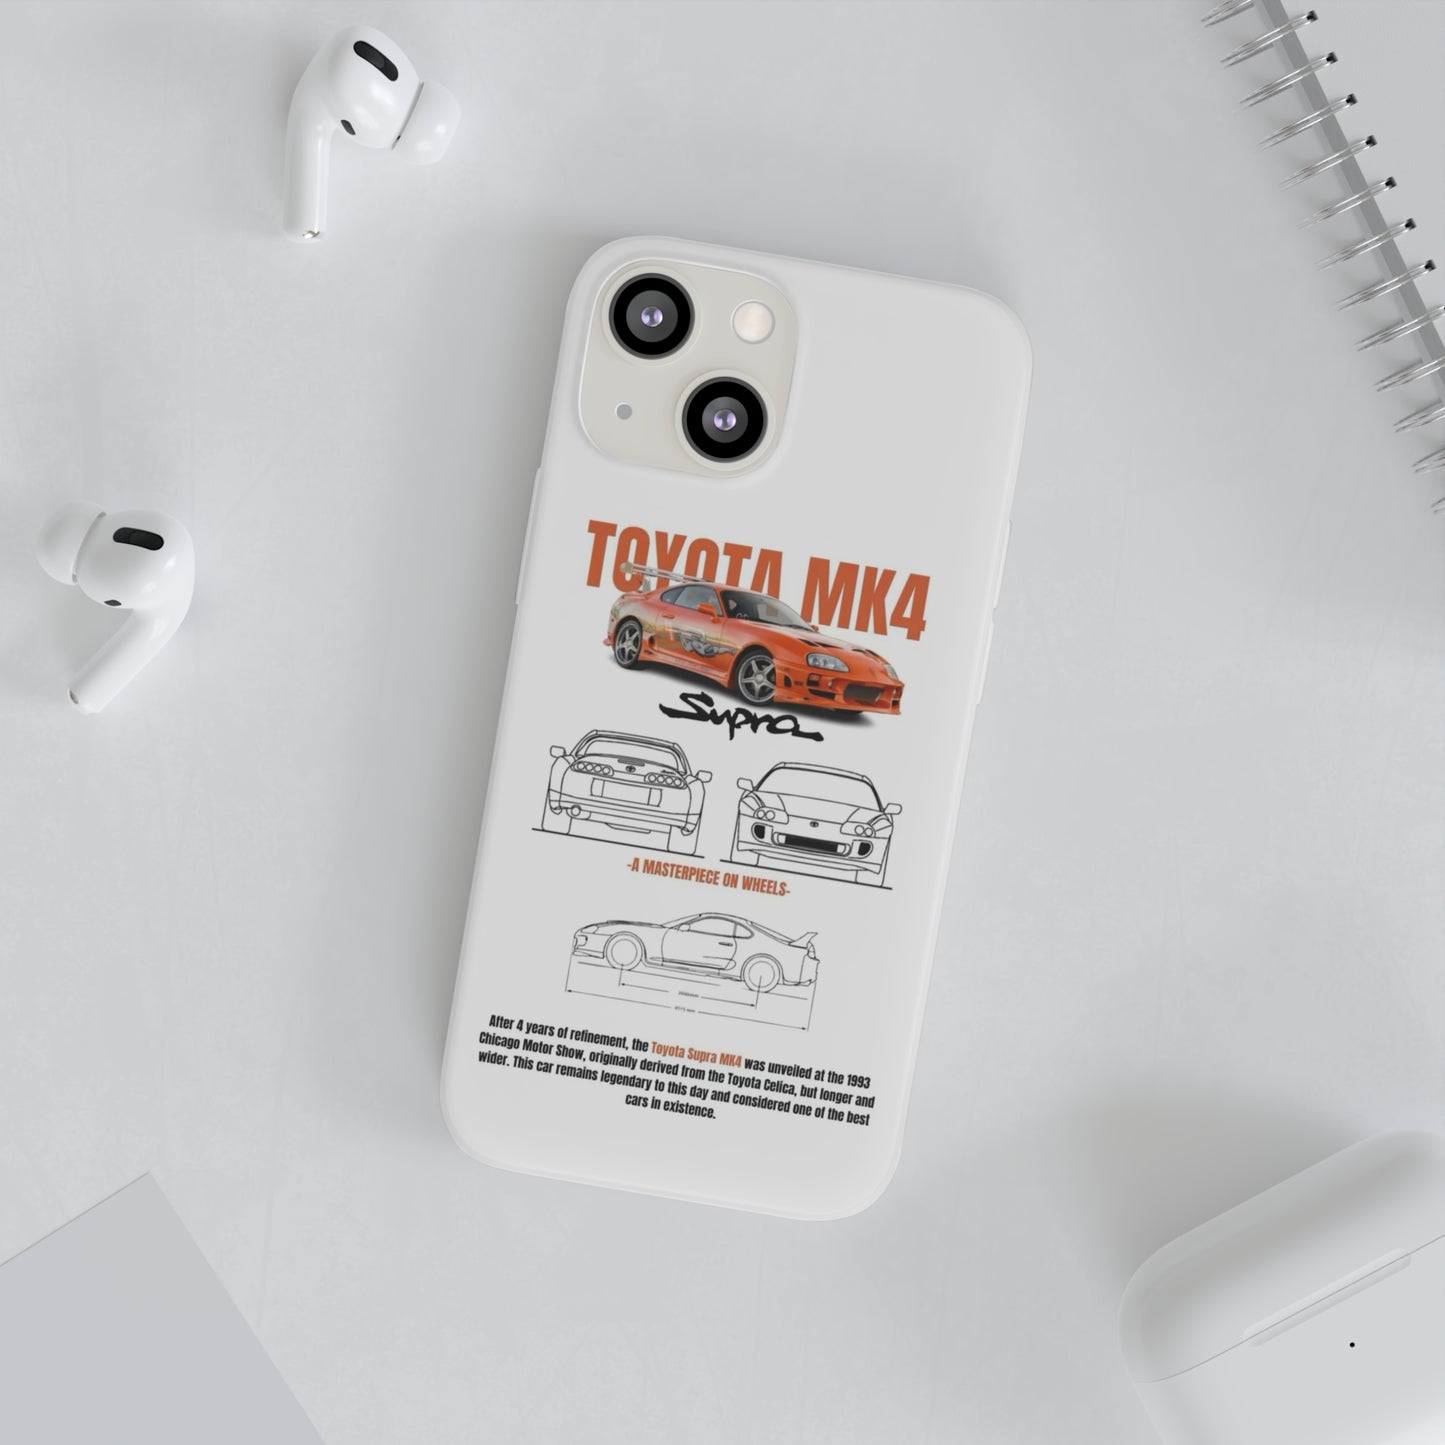 Toyota MK4 Phone Case